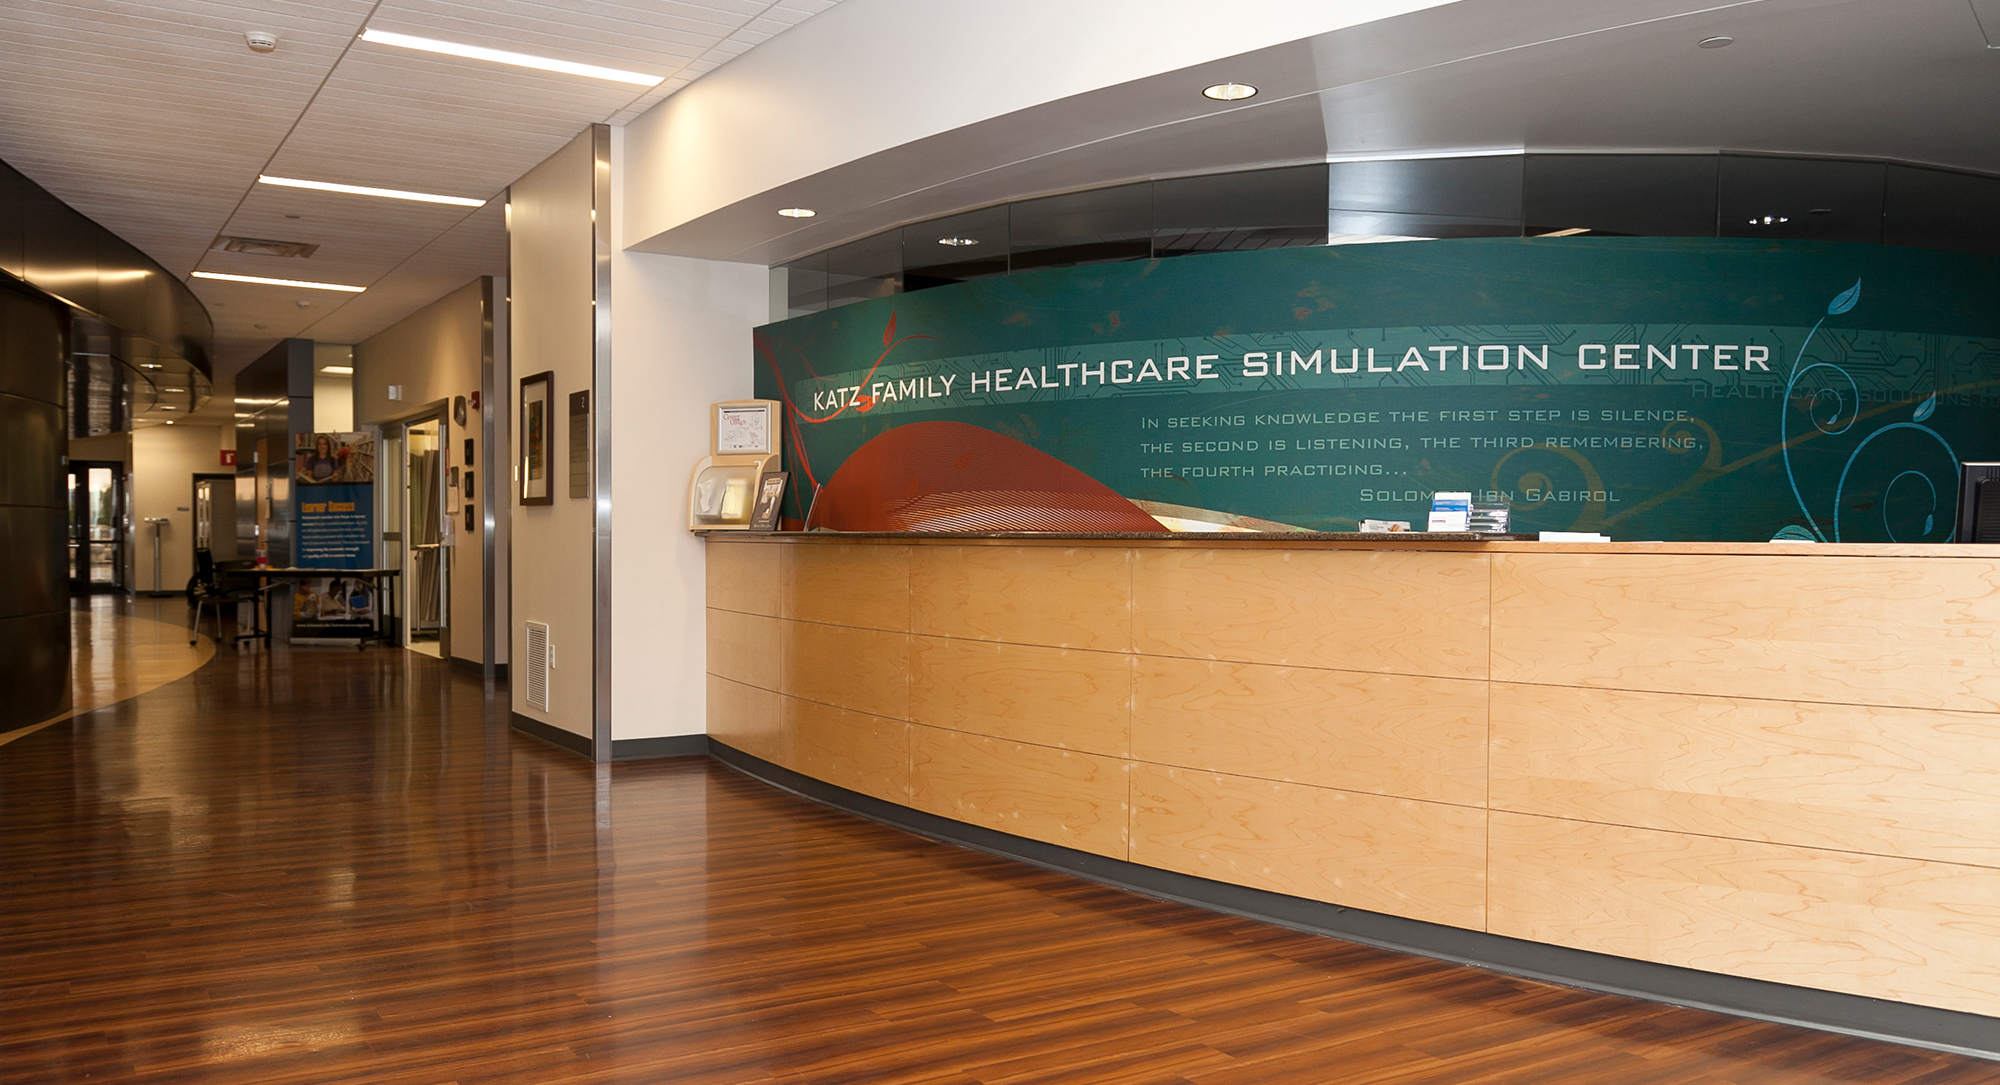 Katz Family Healthcare Simulation Center